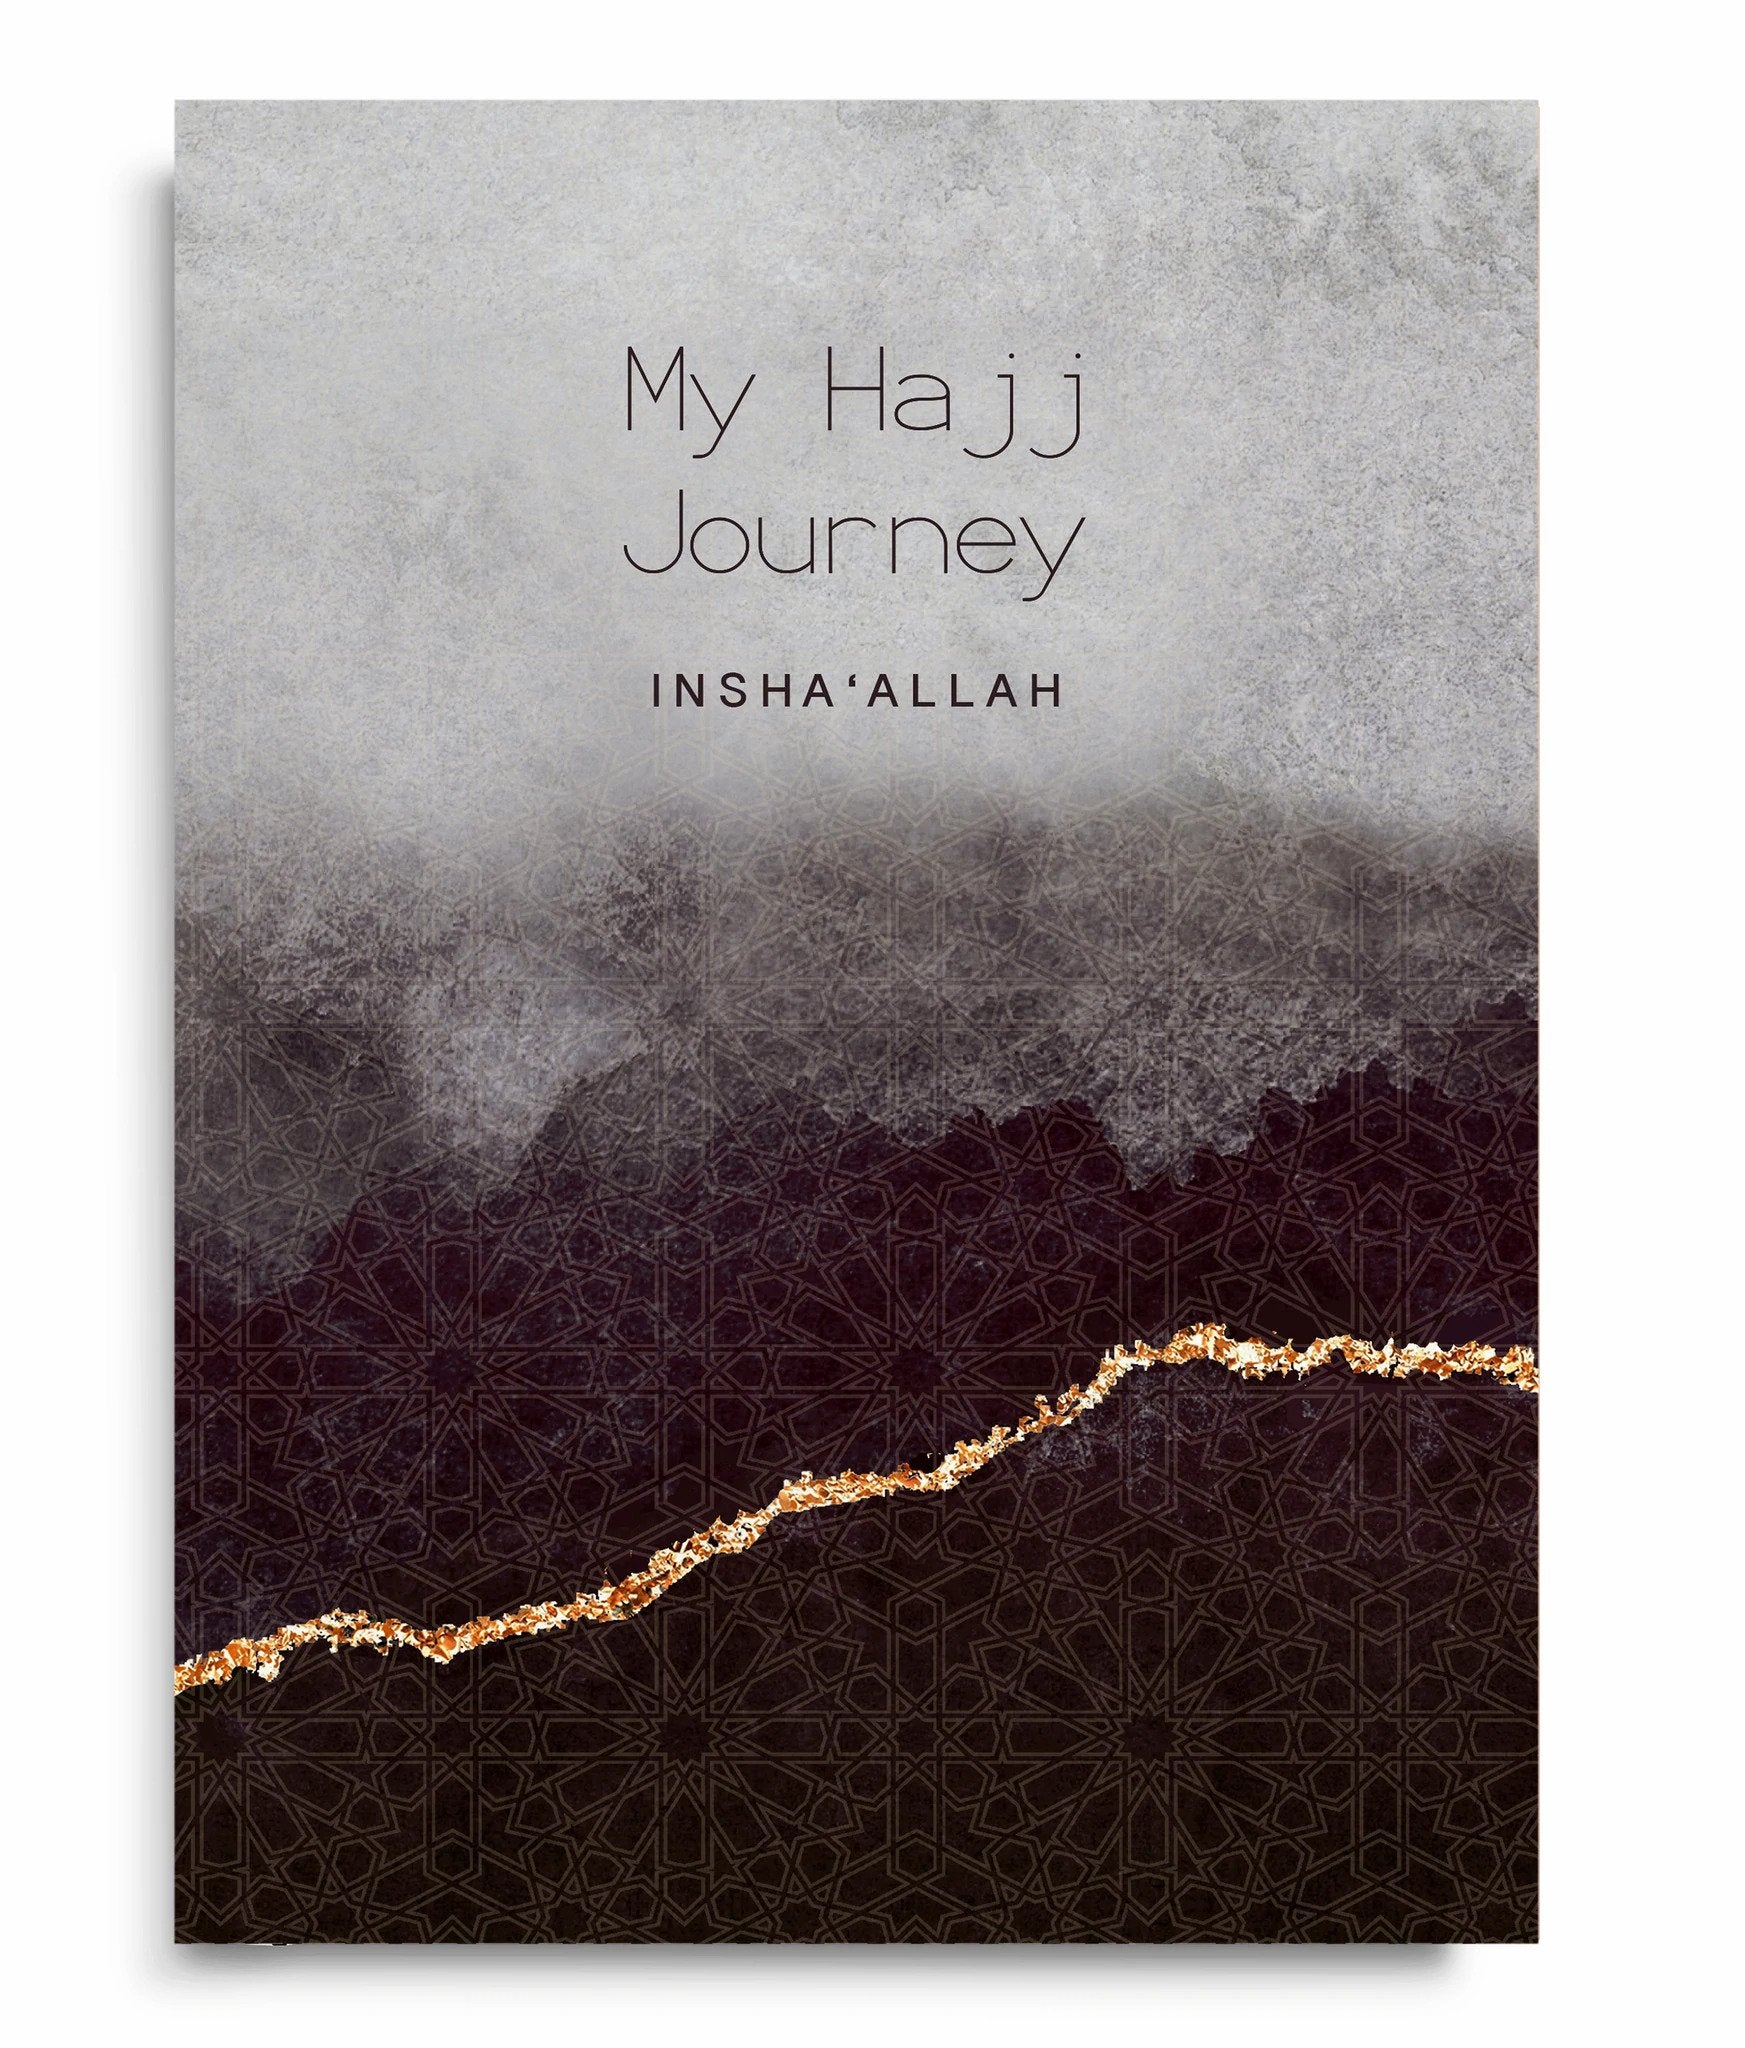 My Hajj Journey - Insha'Allah